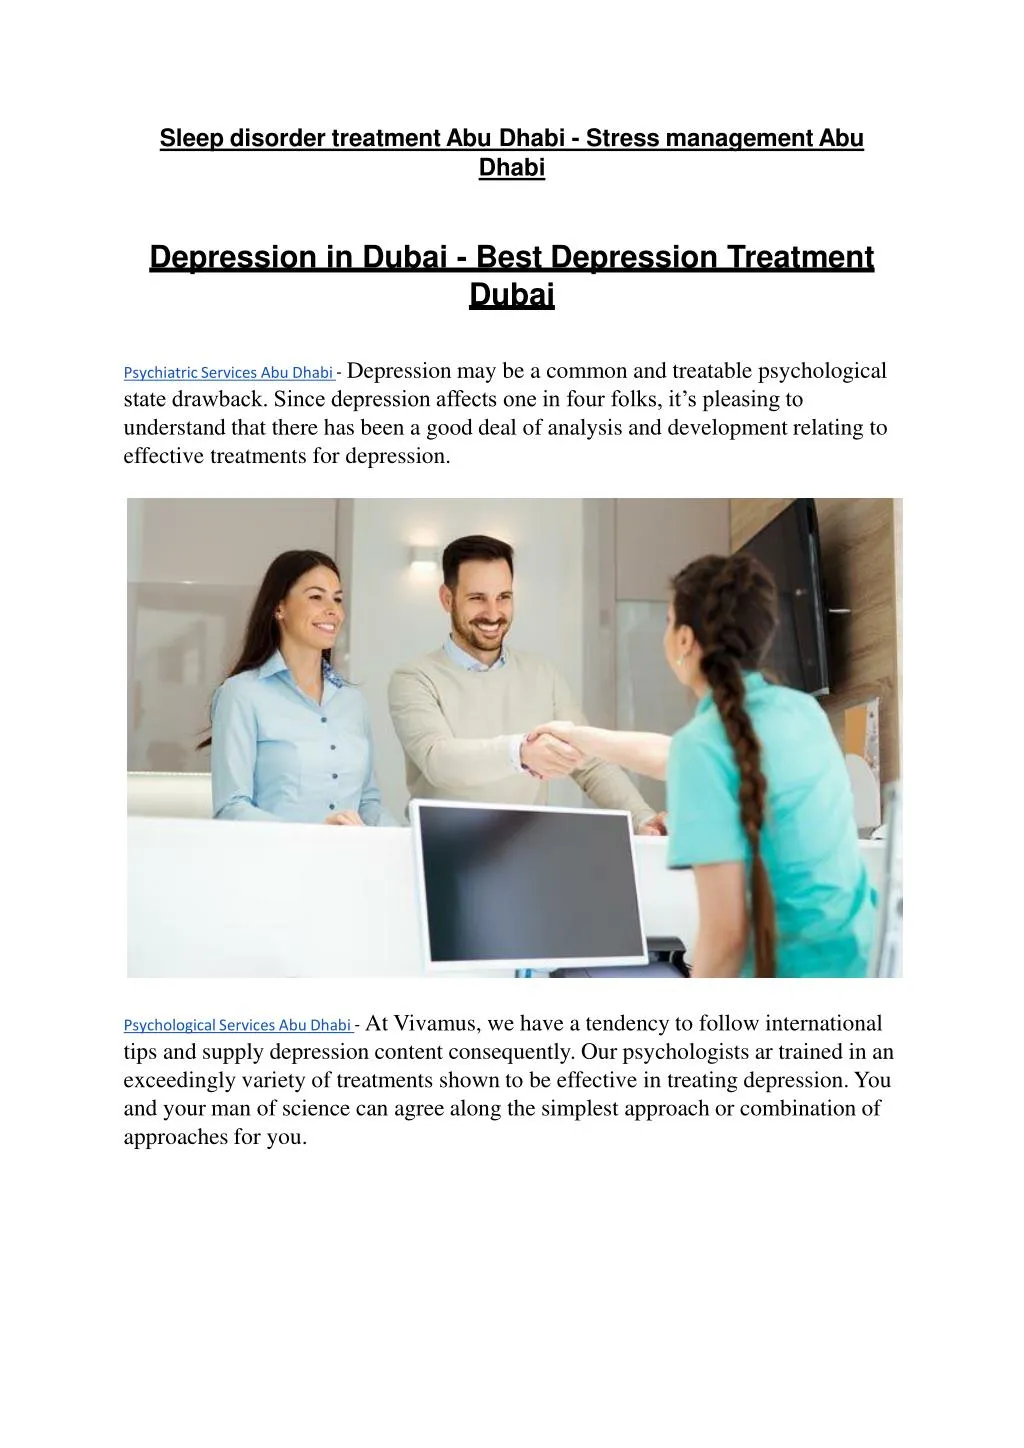 sleep disorder treatment abu dhabi stress